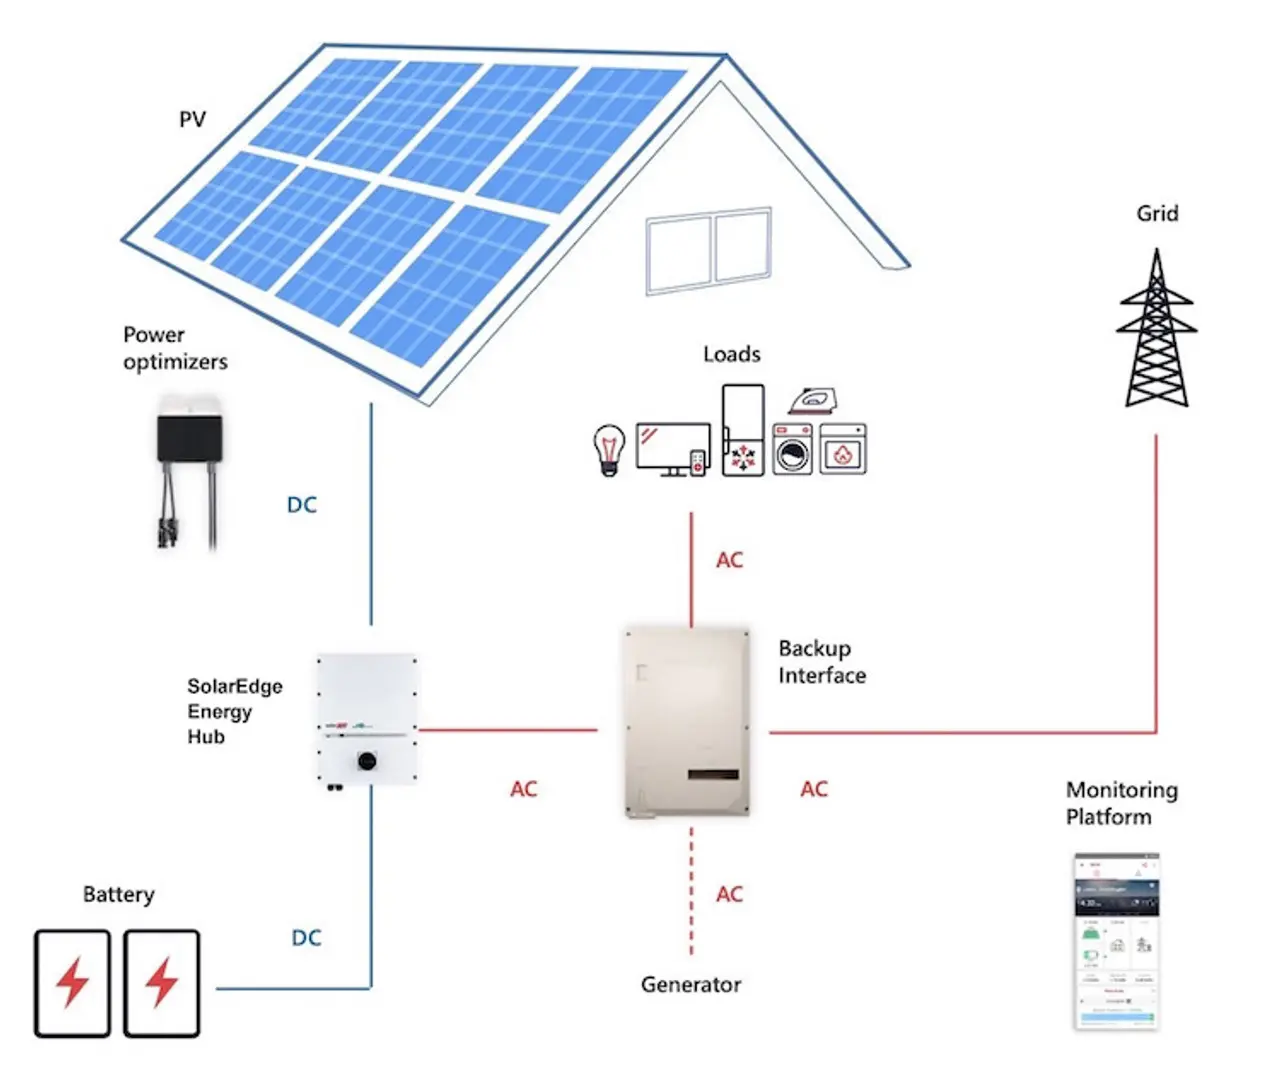 solaredge solar panel - Does SolarEdge sell solar panels